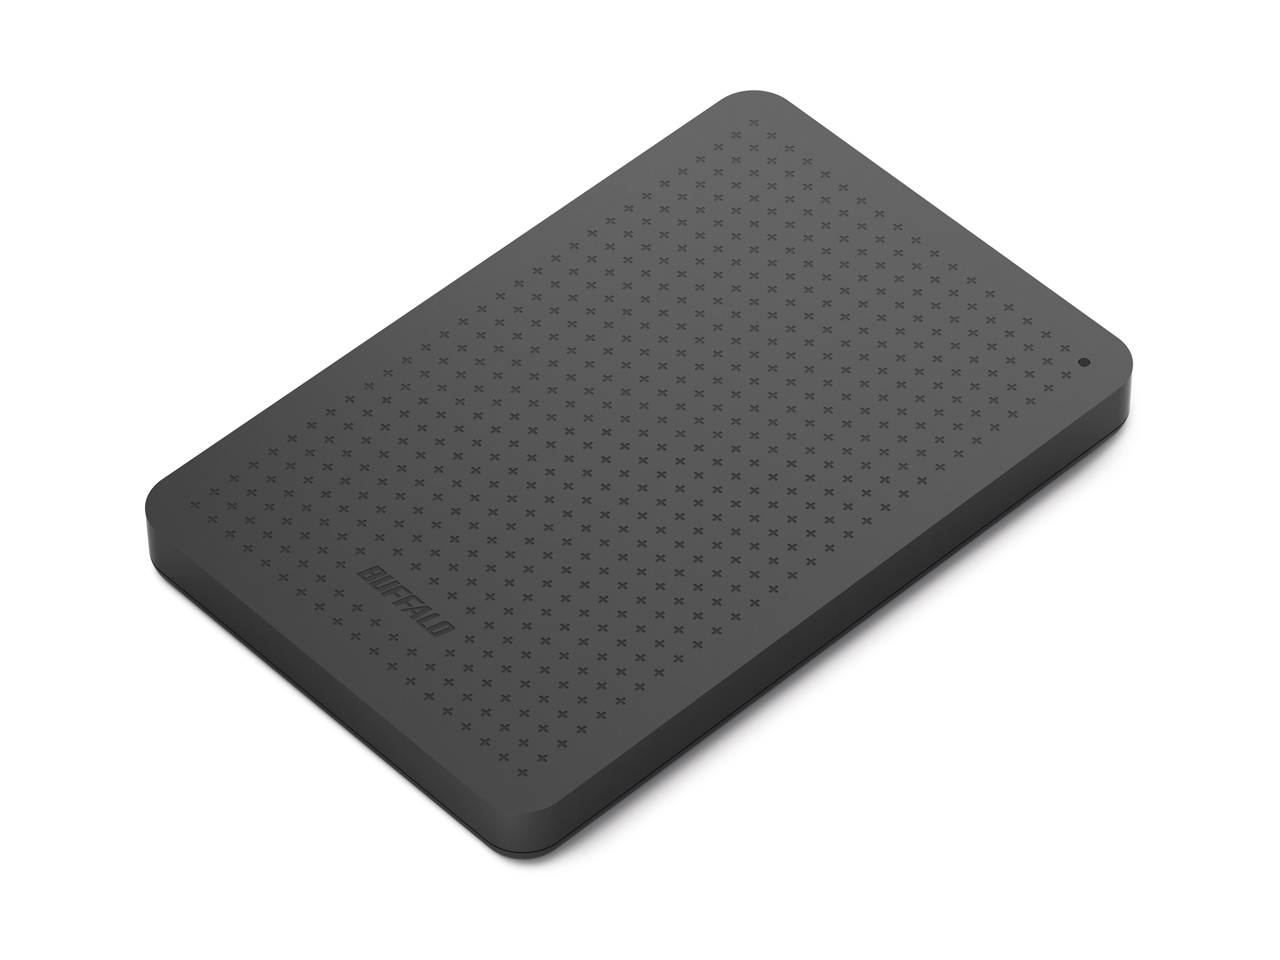 MiniStation portable USB 3.0 slim HDDs forhome - storage - 2.5 